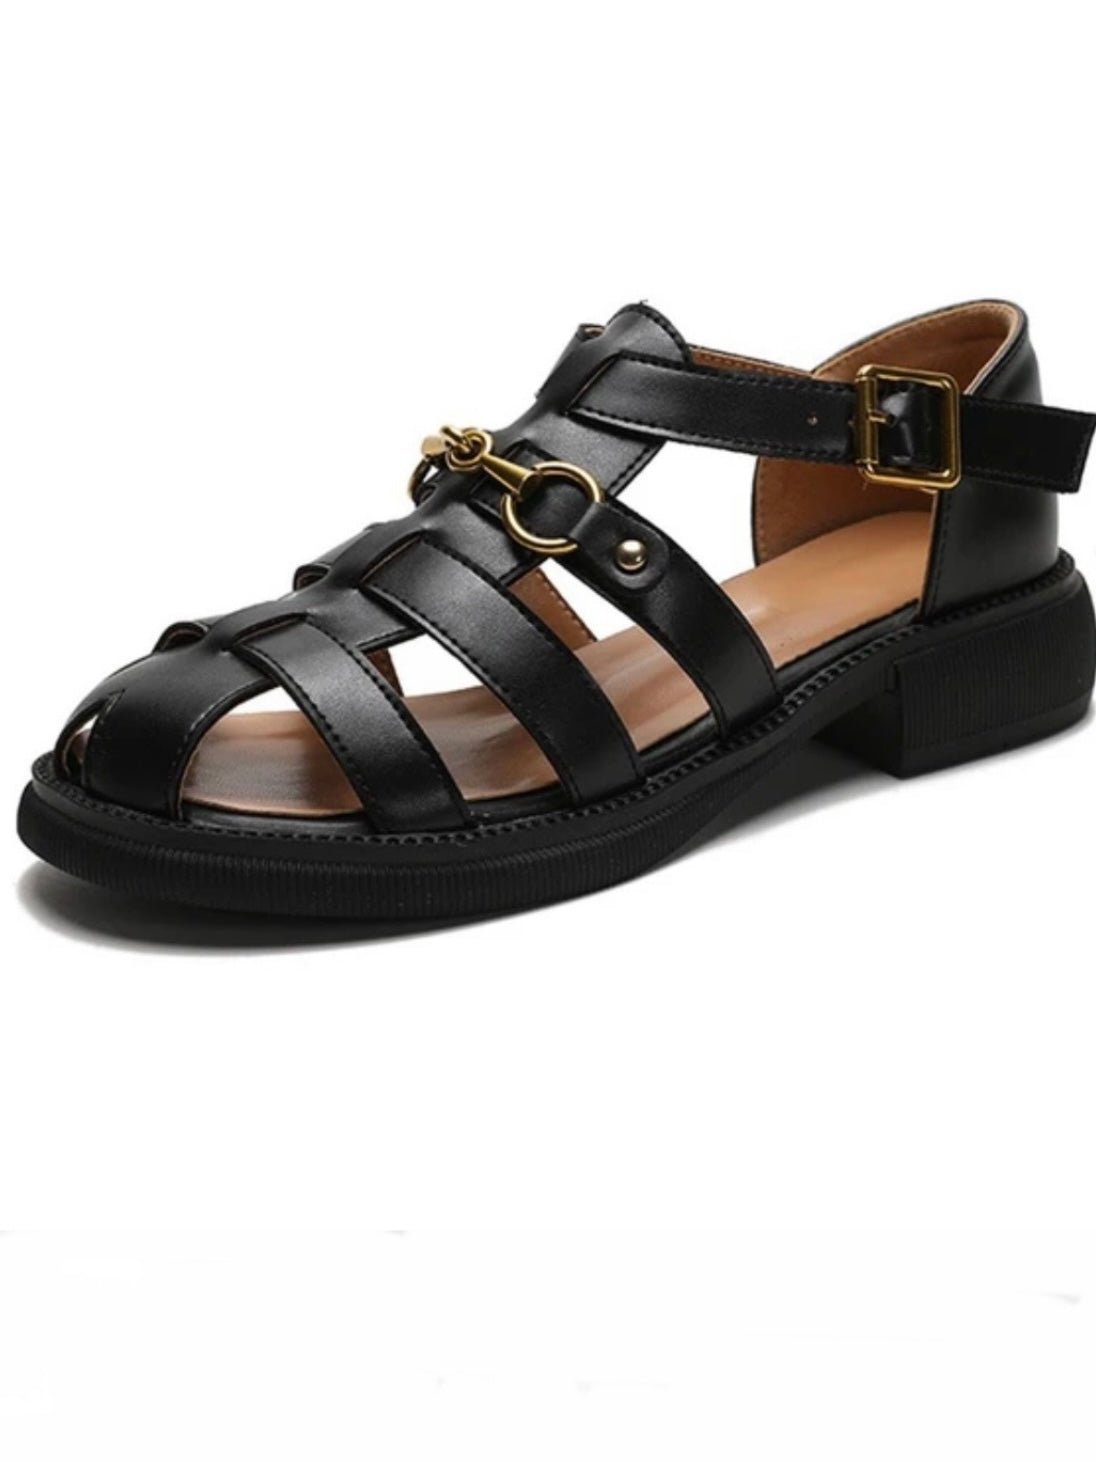 Black Roman sandals - Wapas